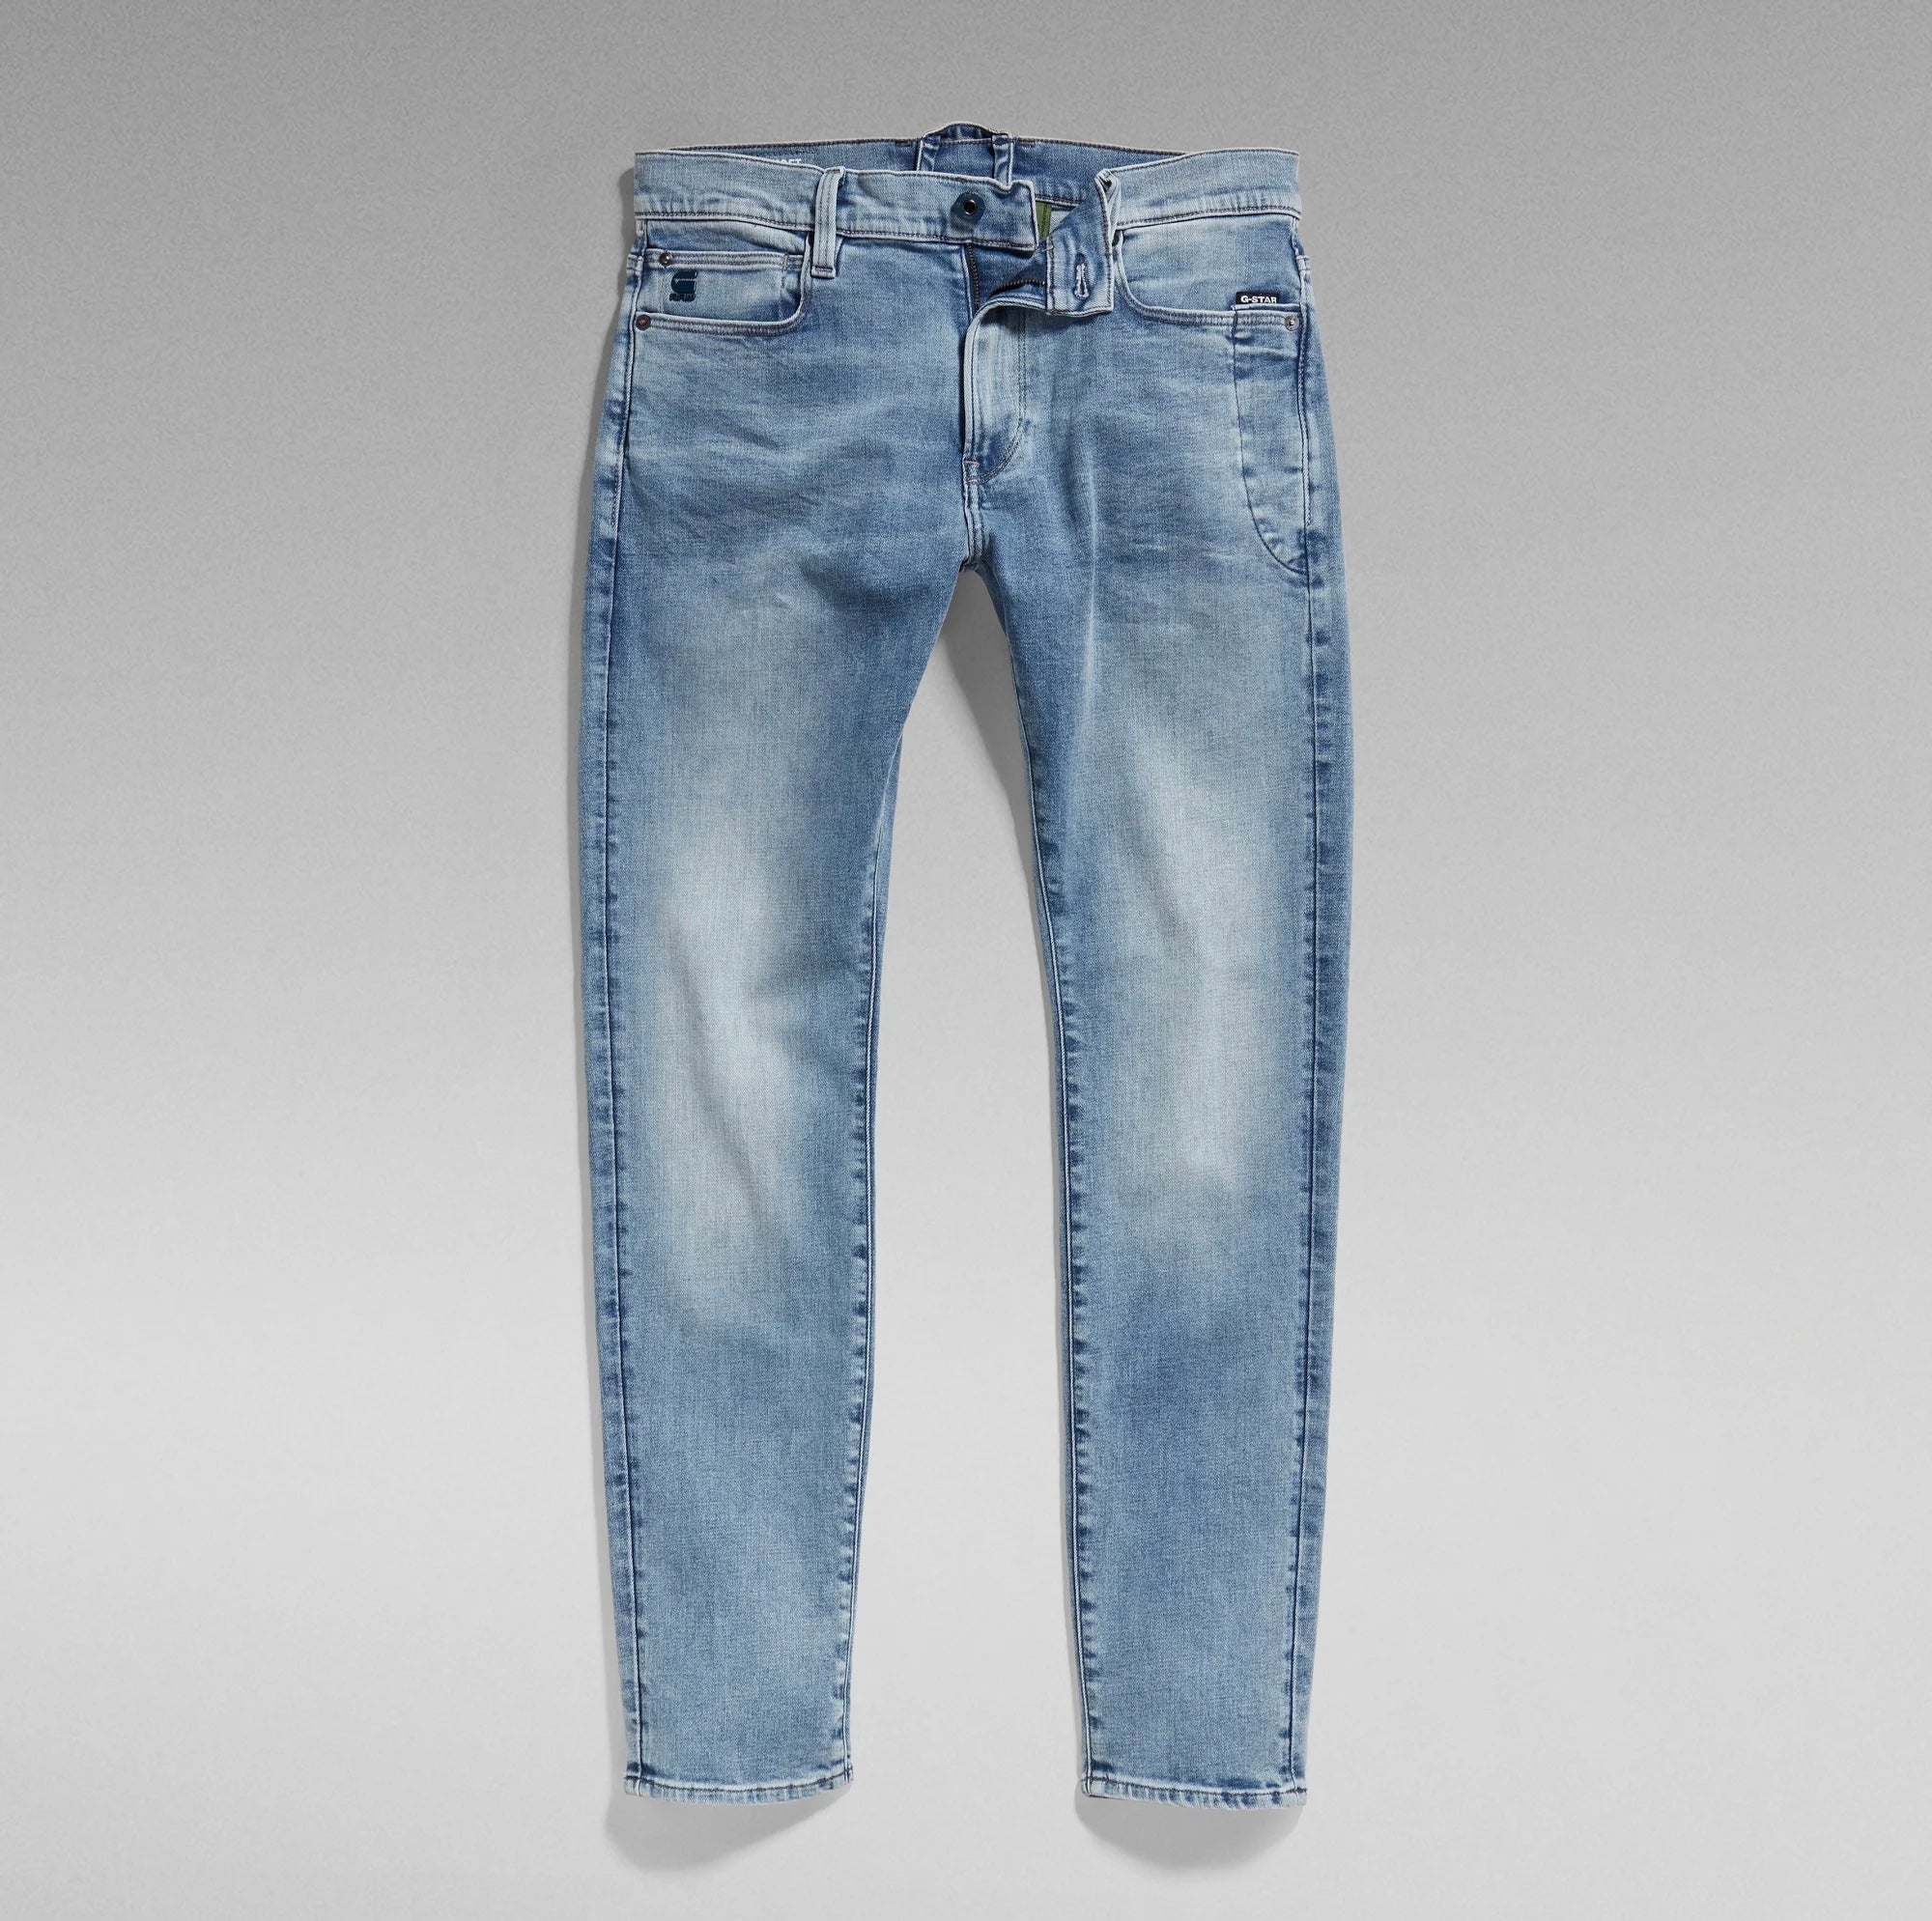 G-Star Raw Men’s Lancet Skinny Jeans Light Indigo Aged Blue Denim Superstretch